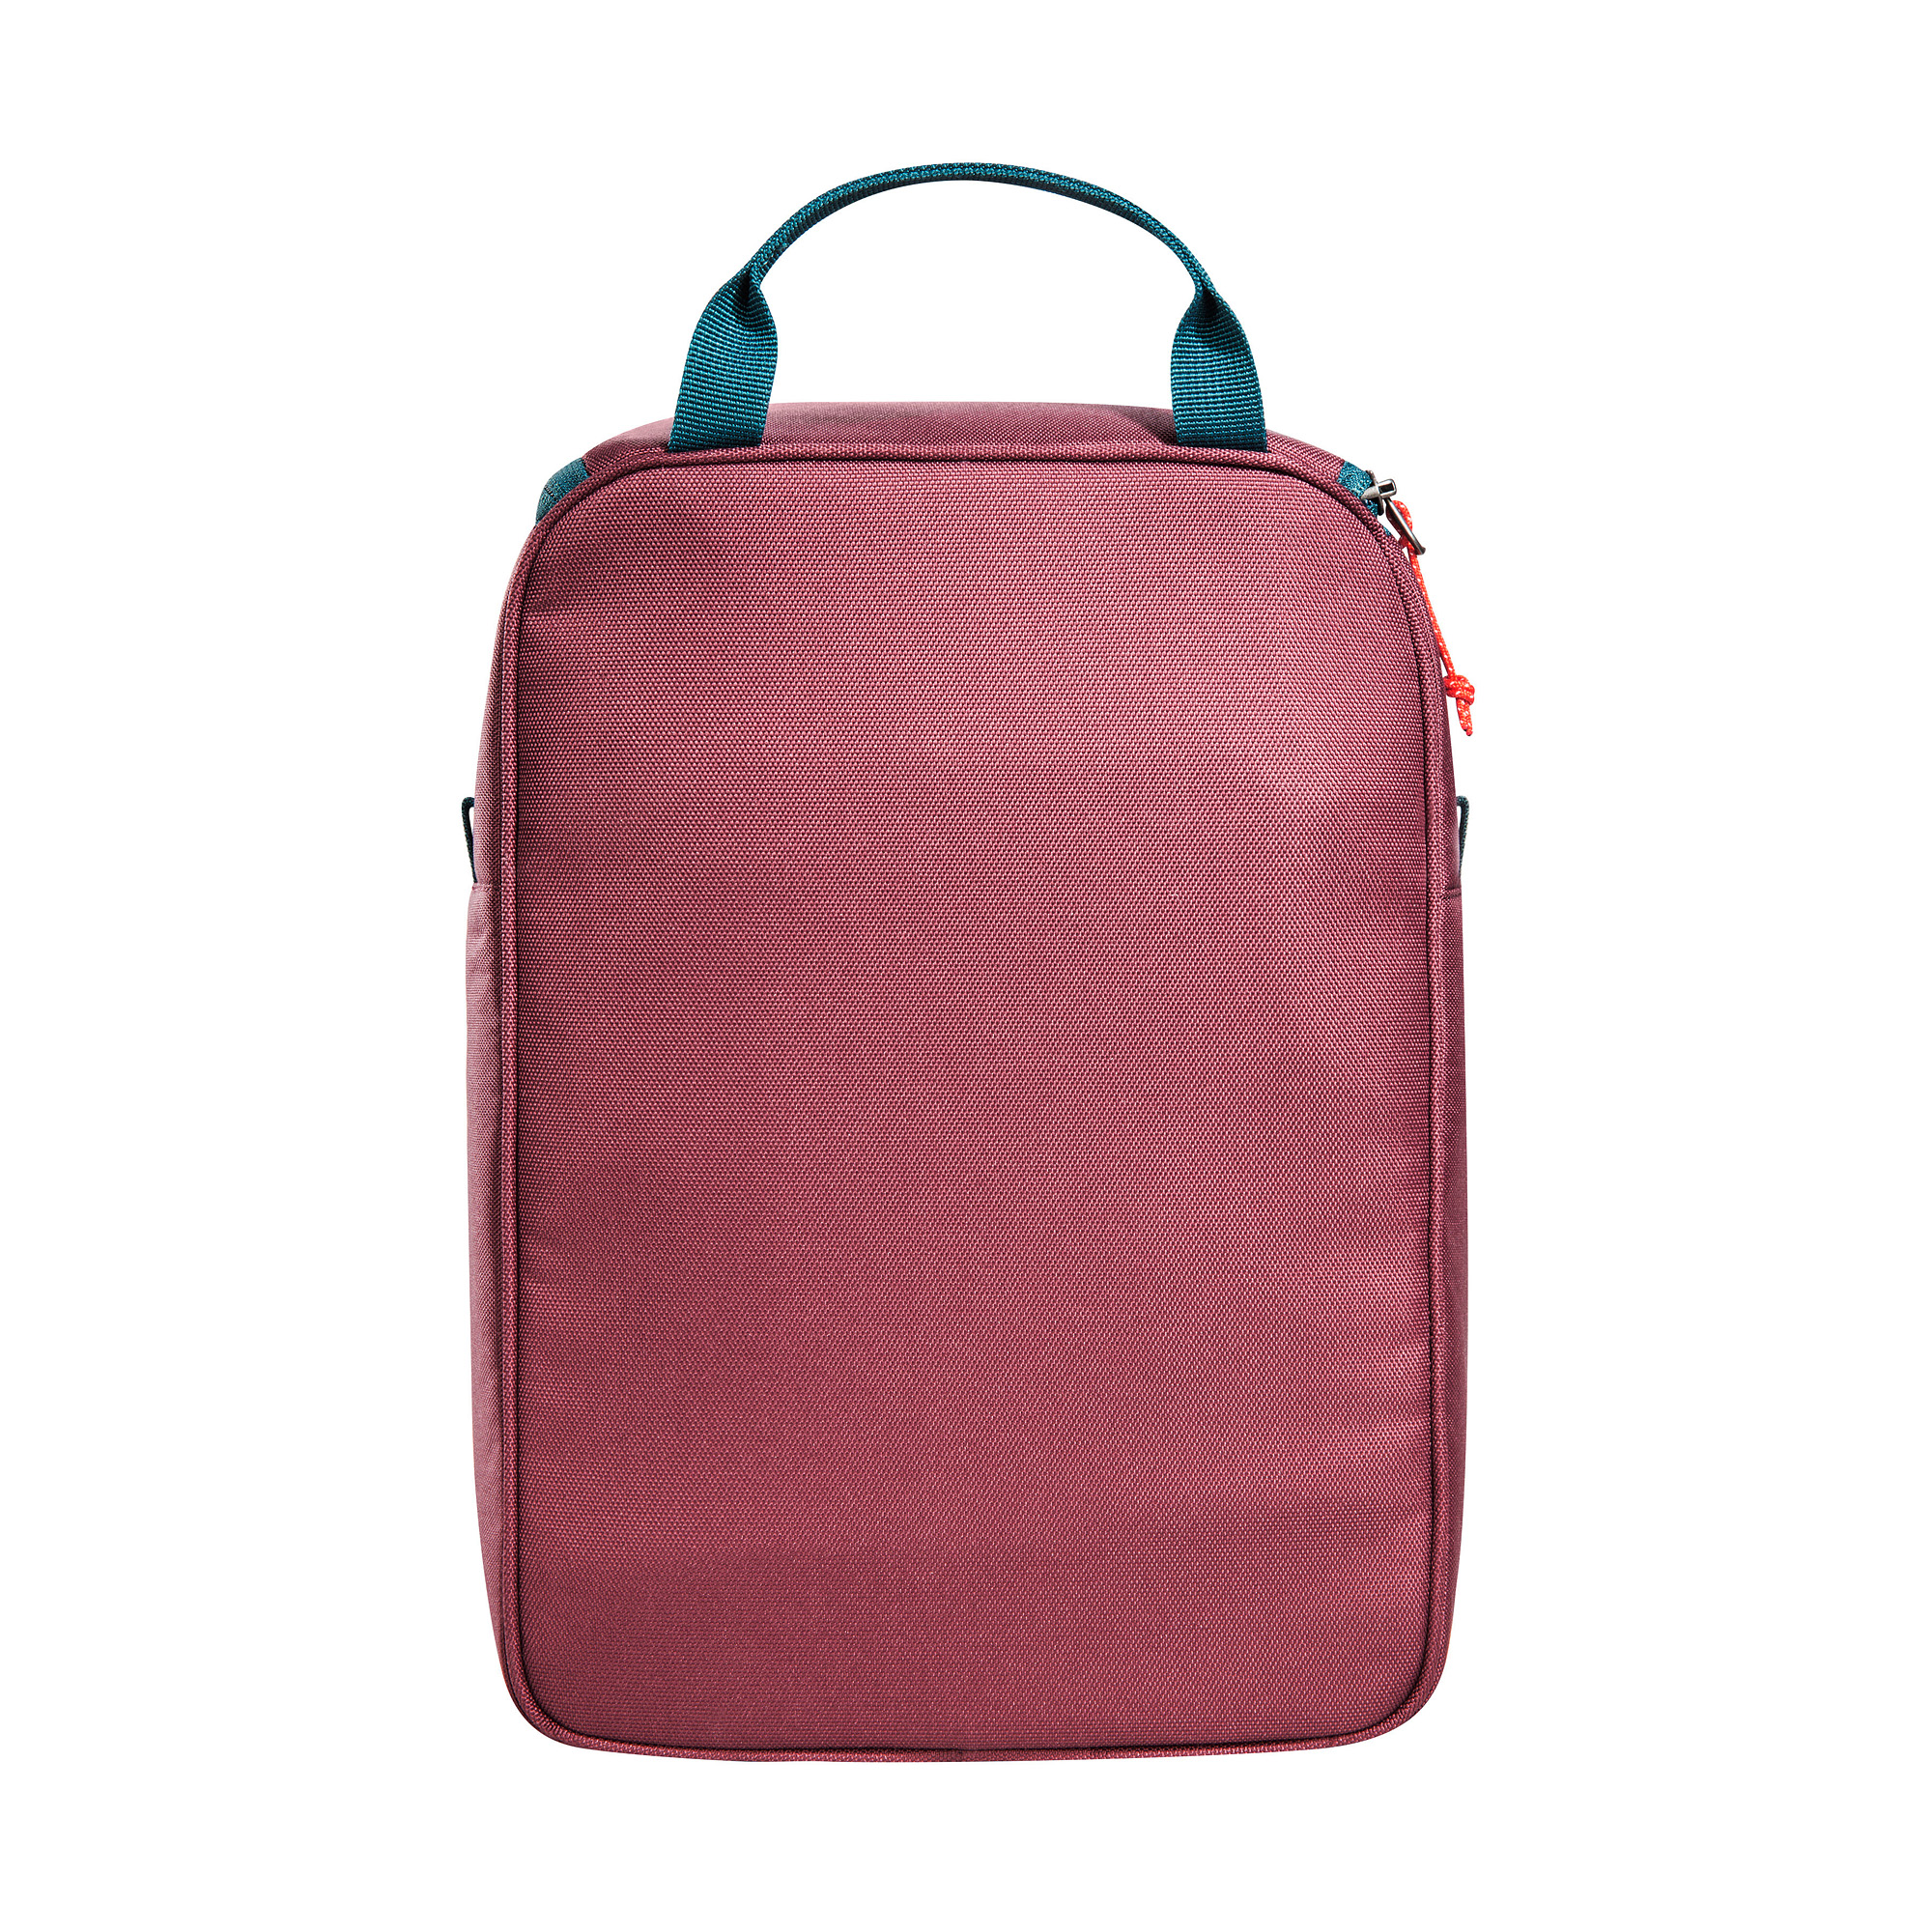 Tatonka Cooler Bag S bordeaux red rot Sonstige Taschen 4013236336306